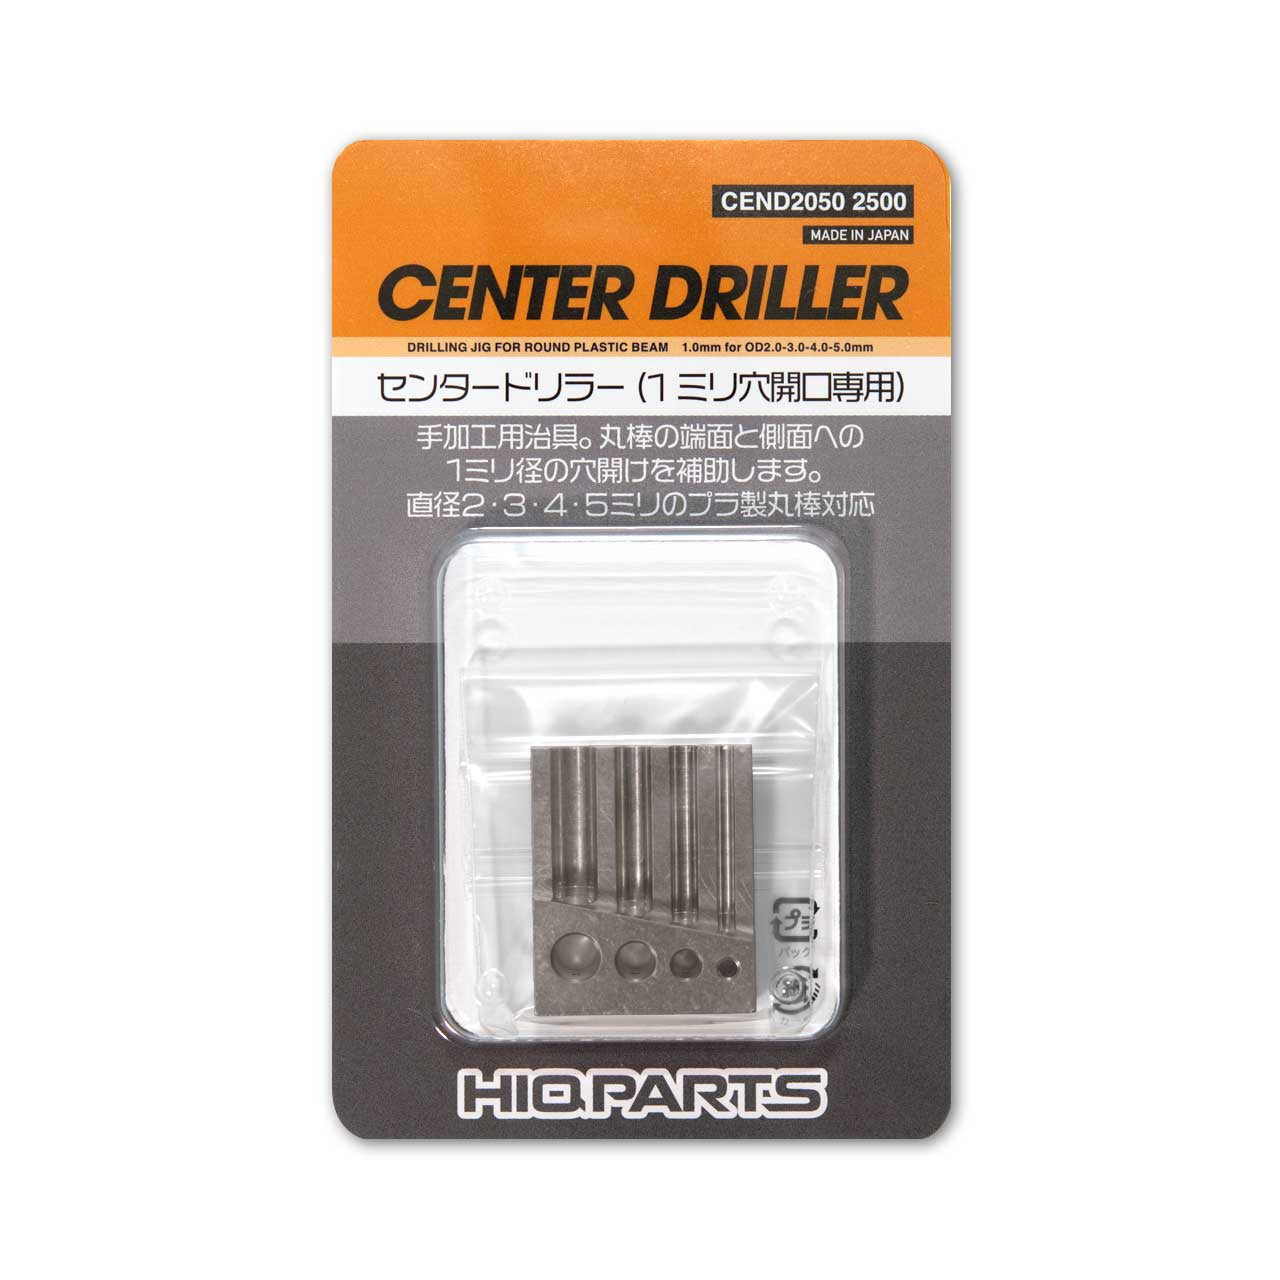 HiQ Parts Center Driller (1pc) CEND2050